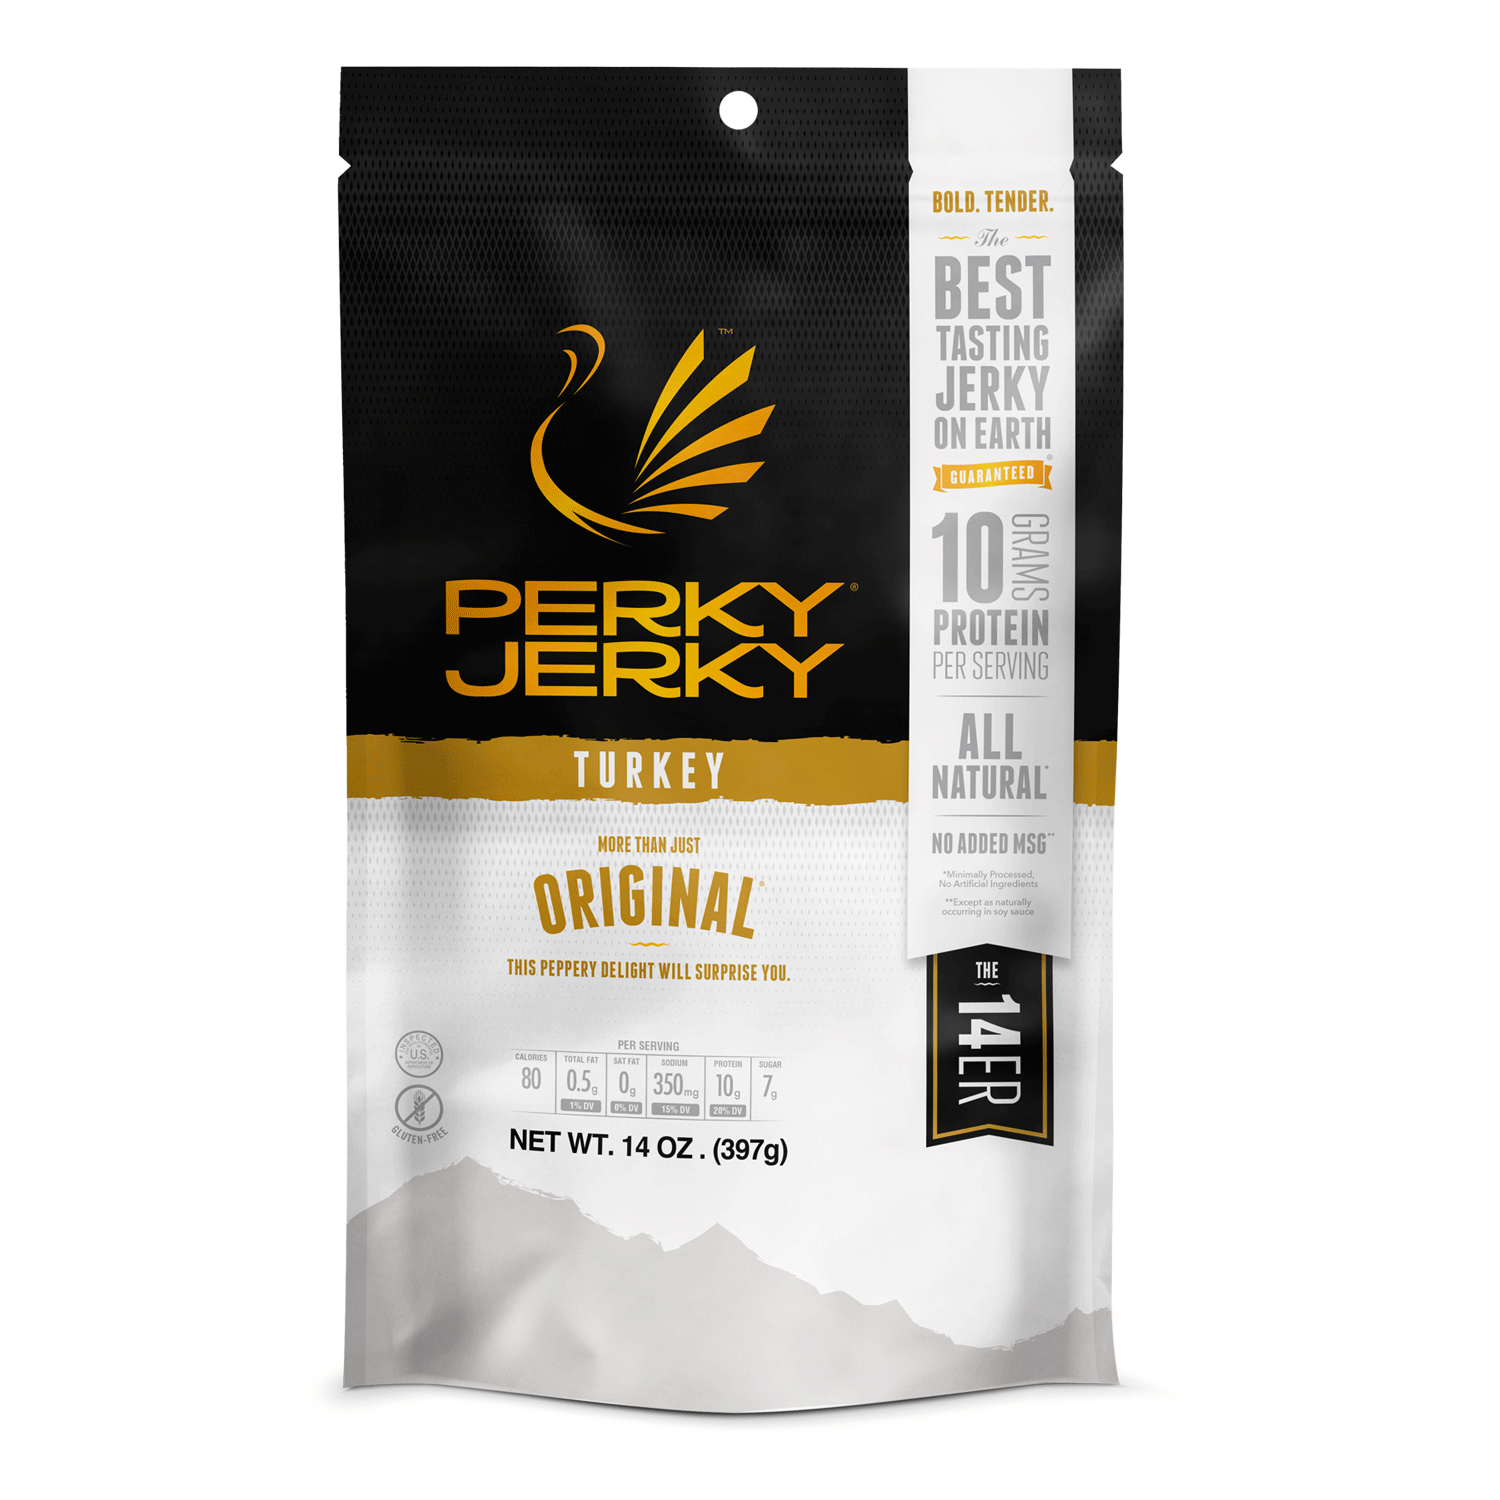 Perky Jerky More Than Just Original Turkey 14oz Bag